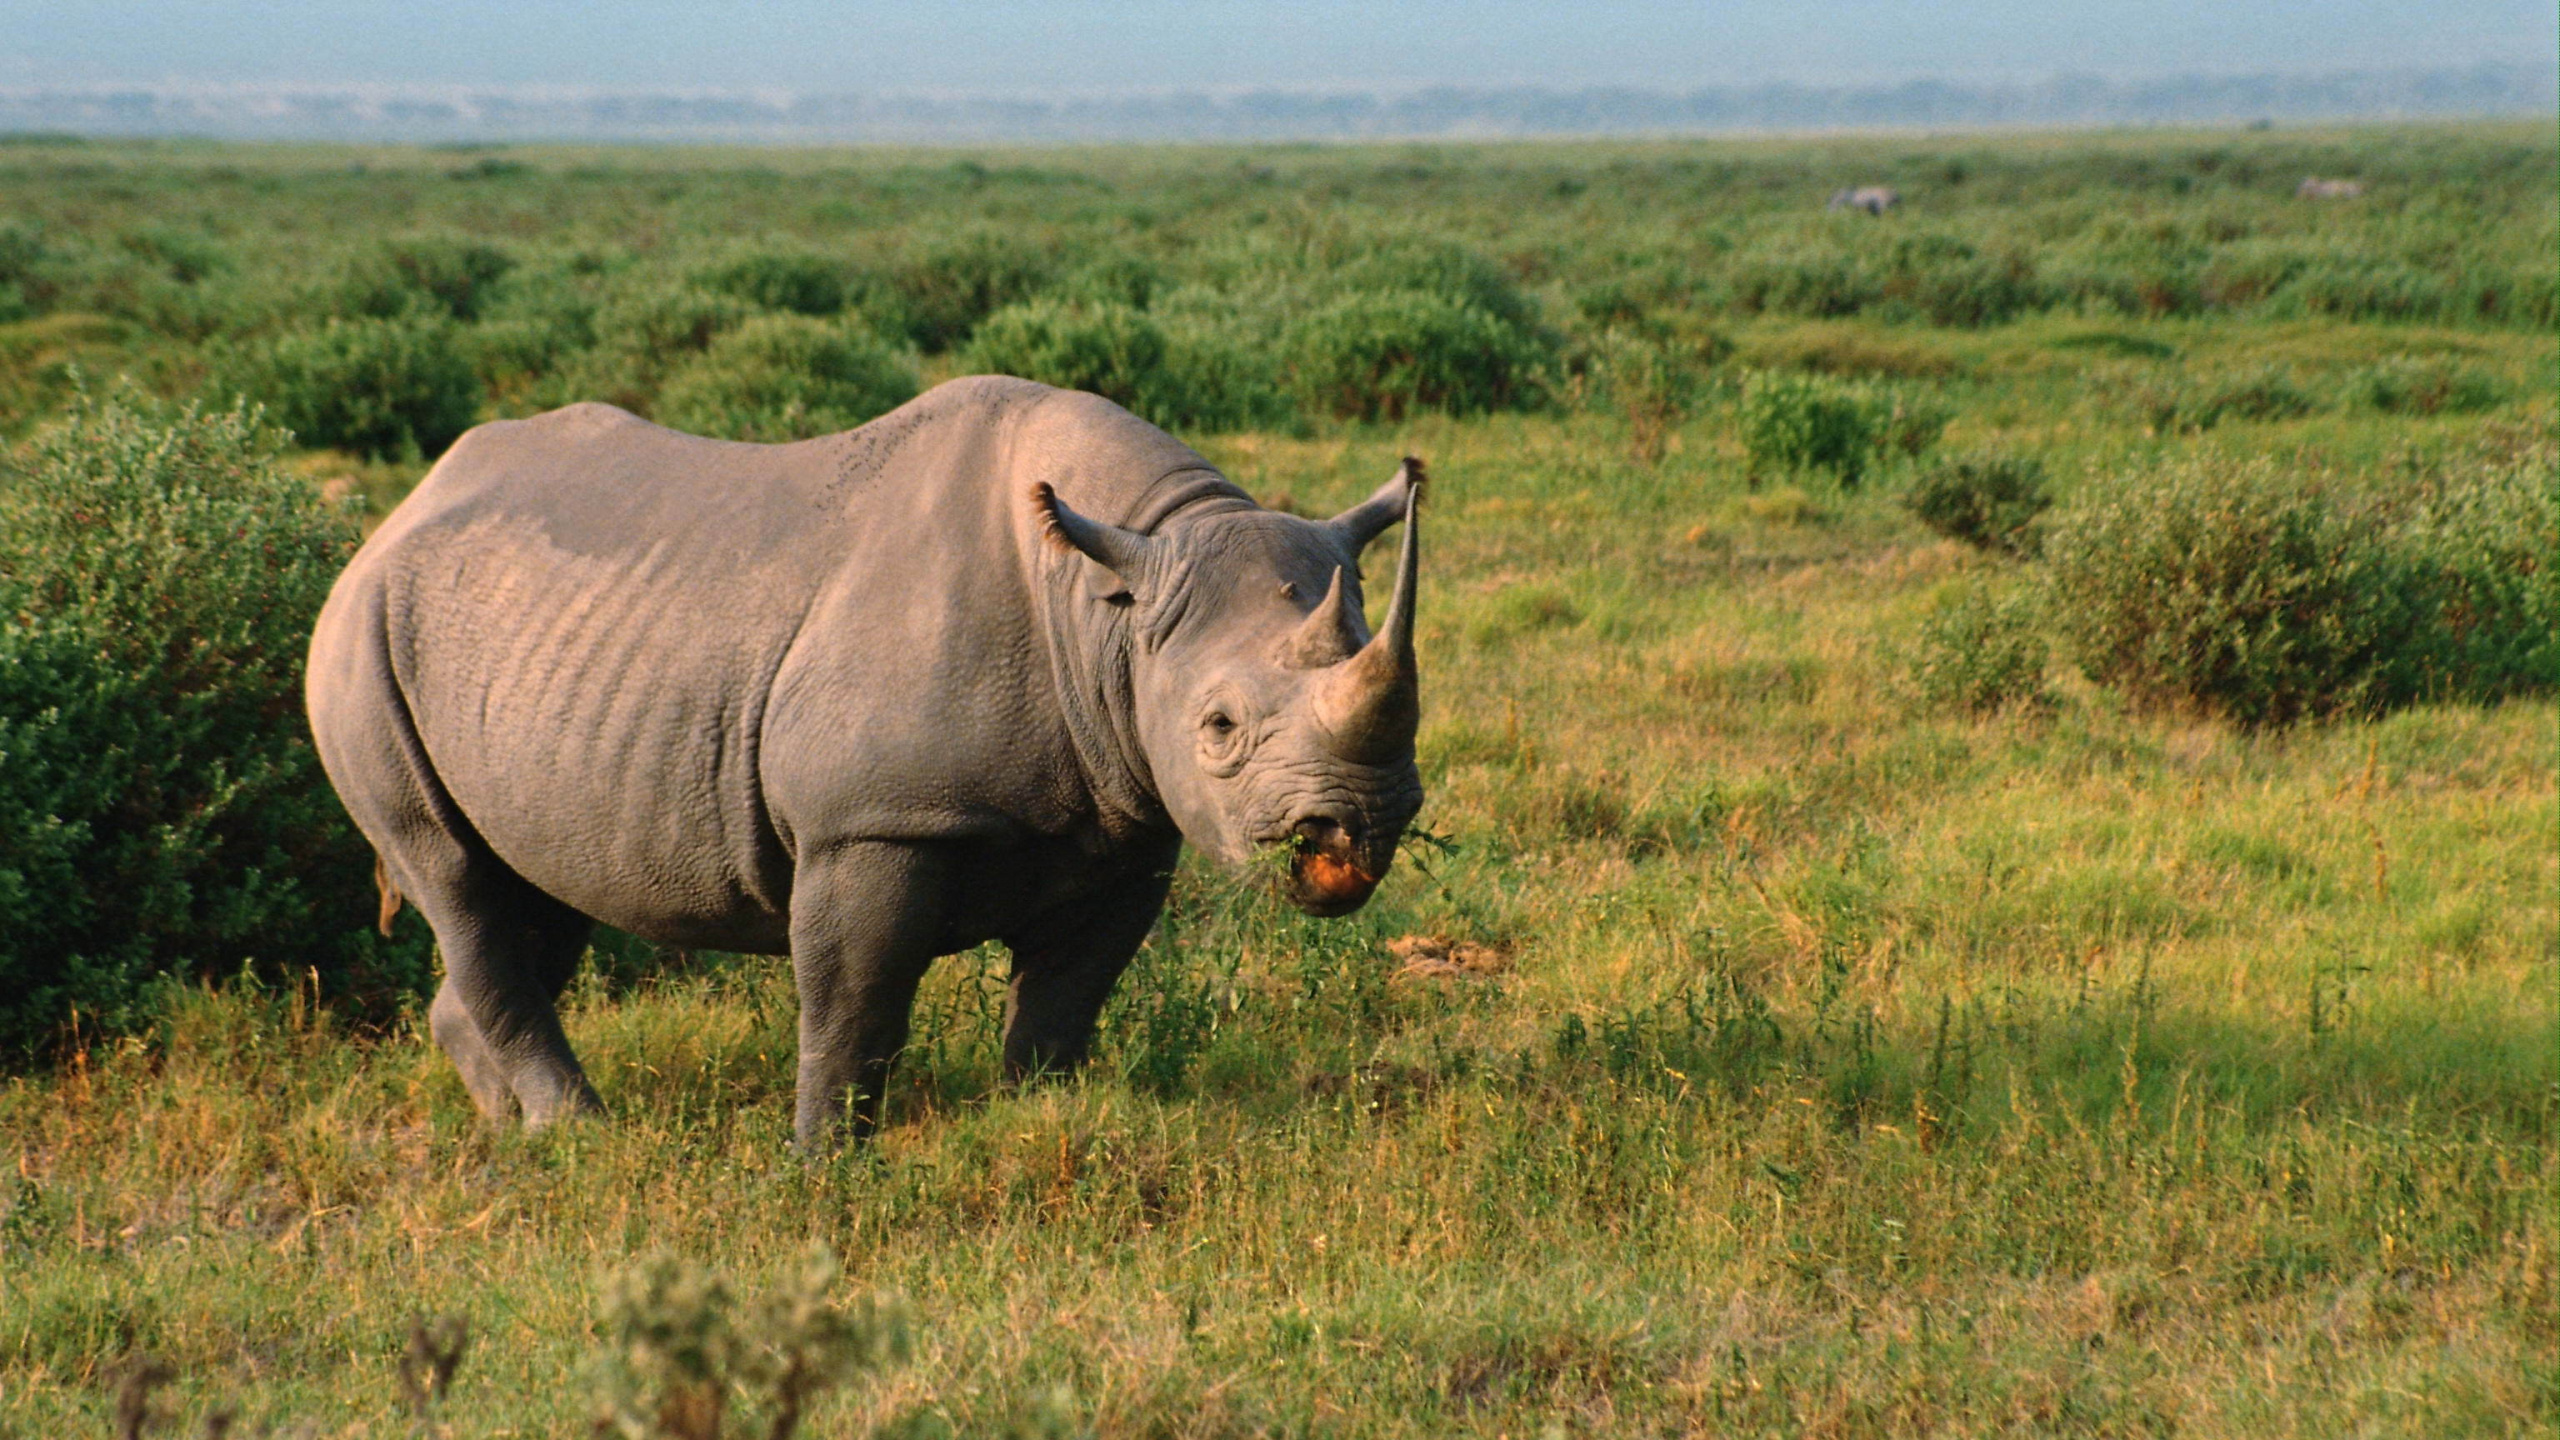 Brown Rhinoceros on Green Grass Field During Daytime. Wallpaper in 2560x1440 Resolution